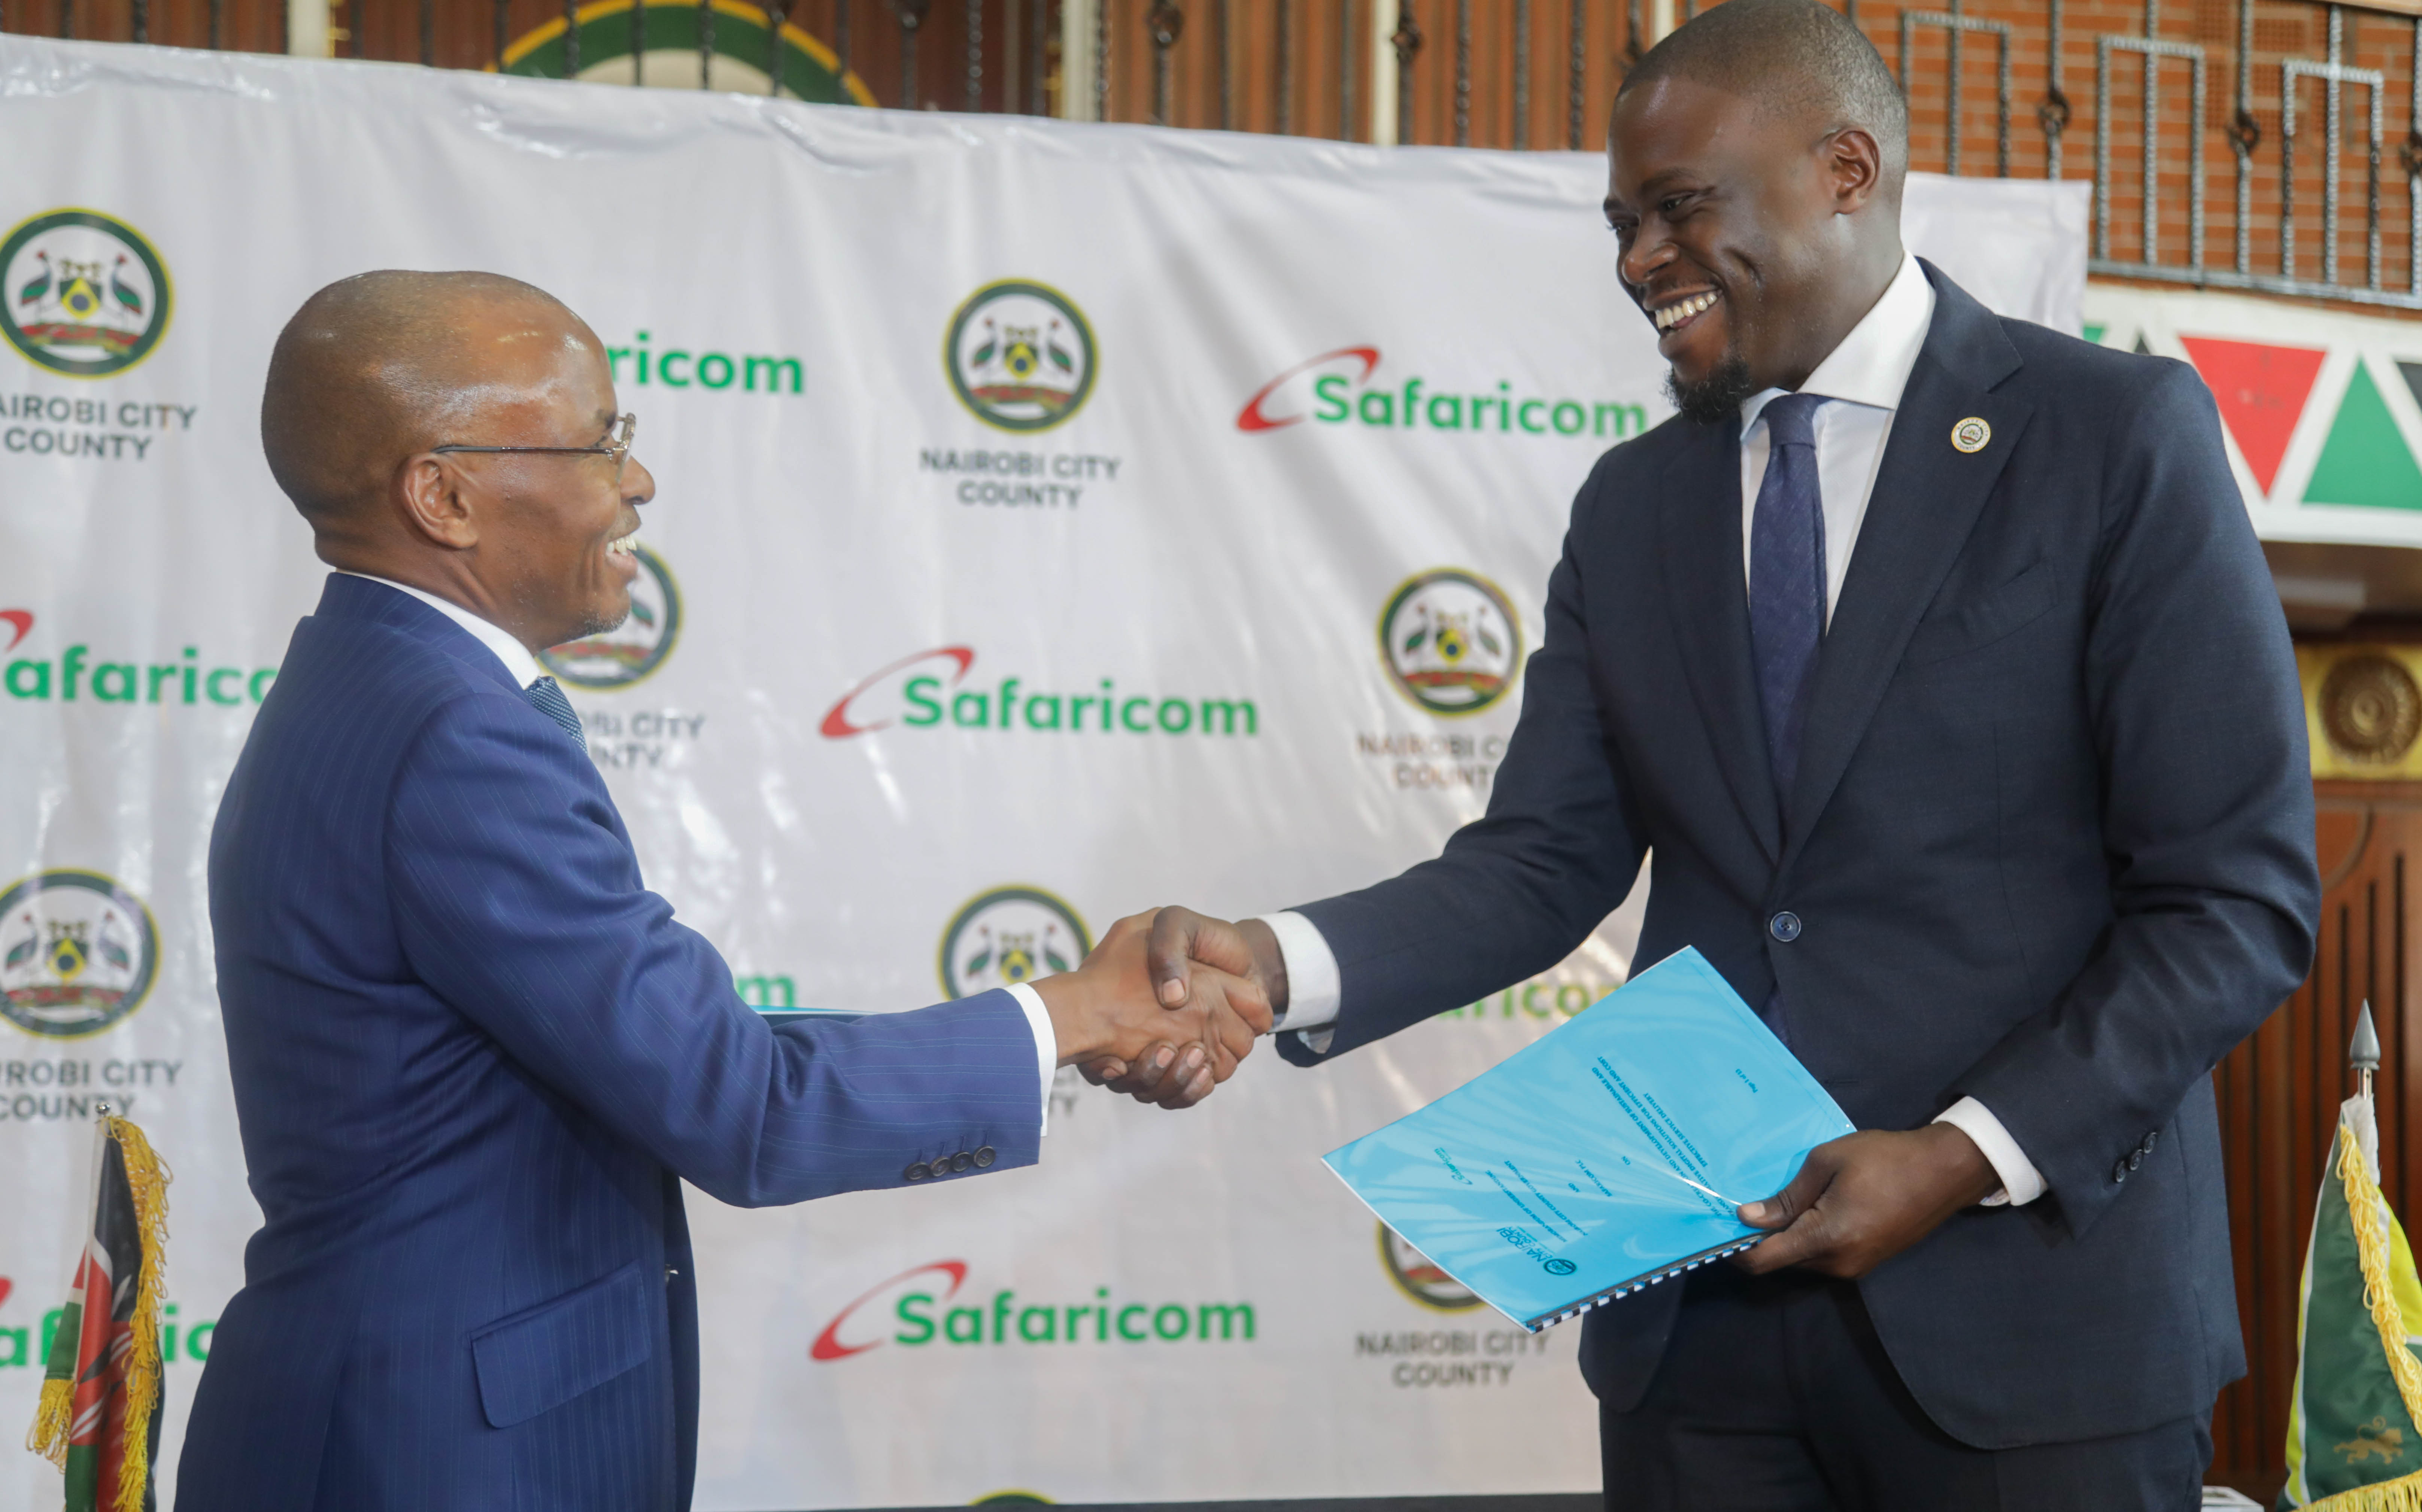 Safaricom and Nairobi City County Partner to Digitise County Services